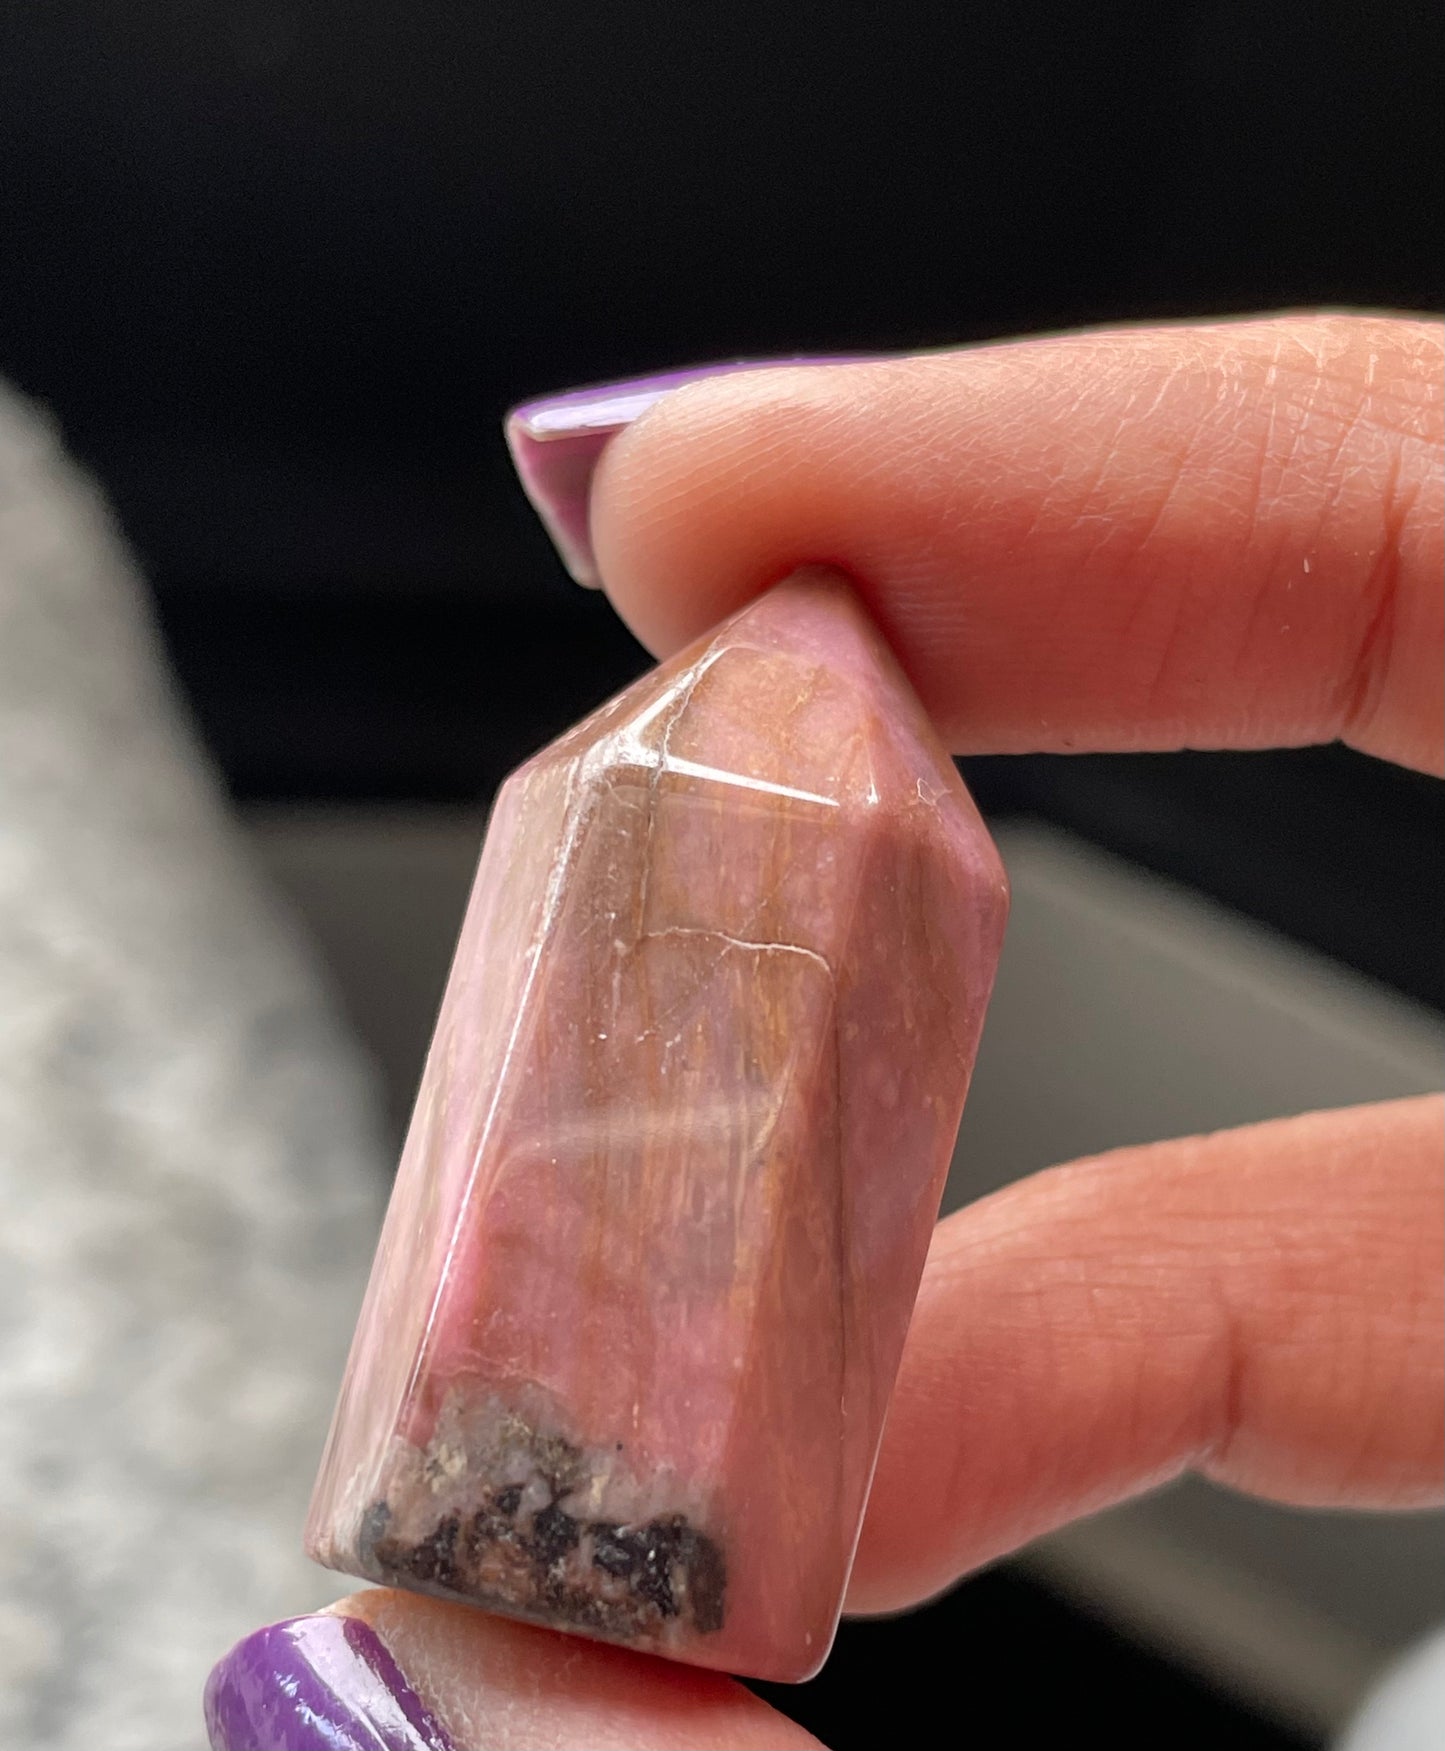 Rhodonite Gemstone Crystal Mini Point Tower & Tumbled Stone - Gift Set (1)